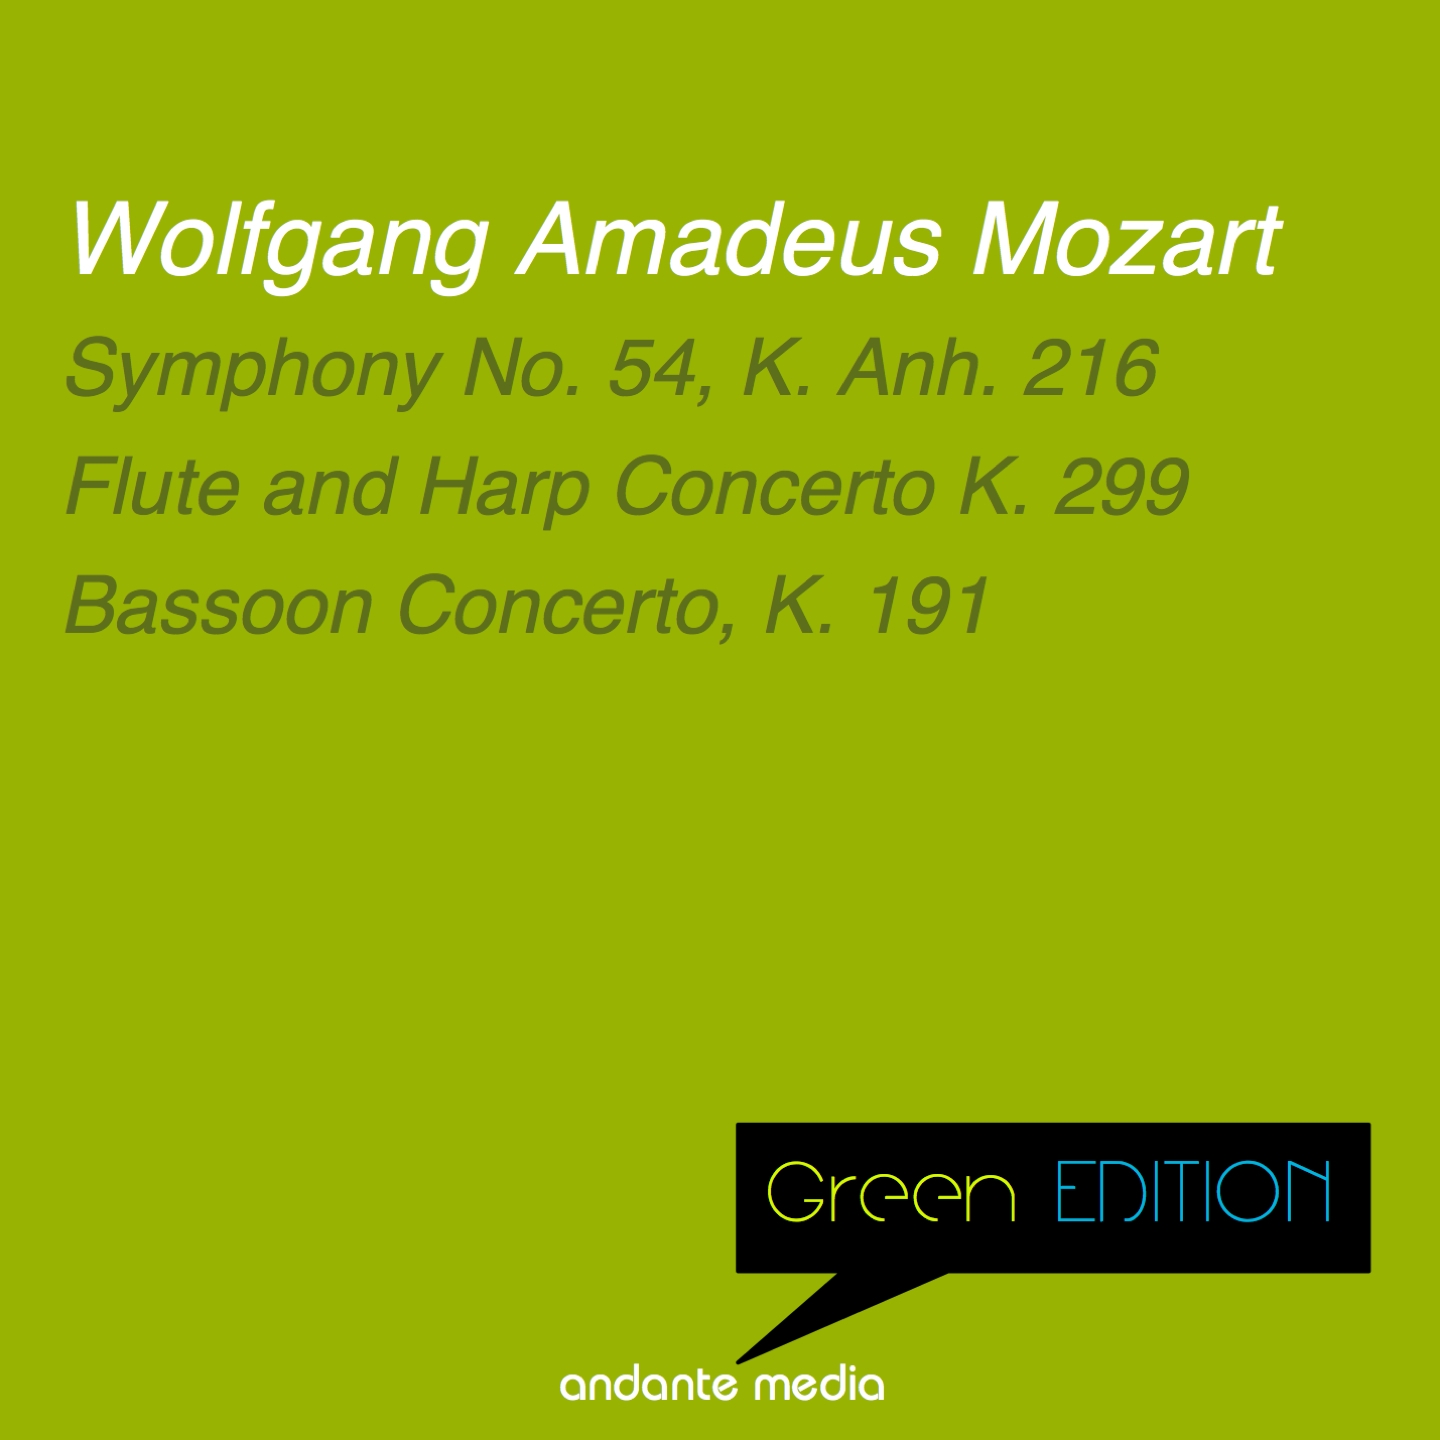 Flute and Harp Concerto in C Major, K. 299: II. Andantino